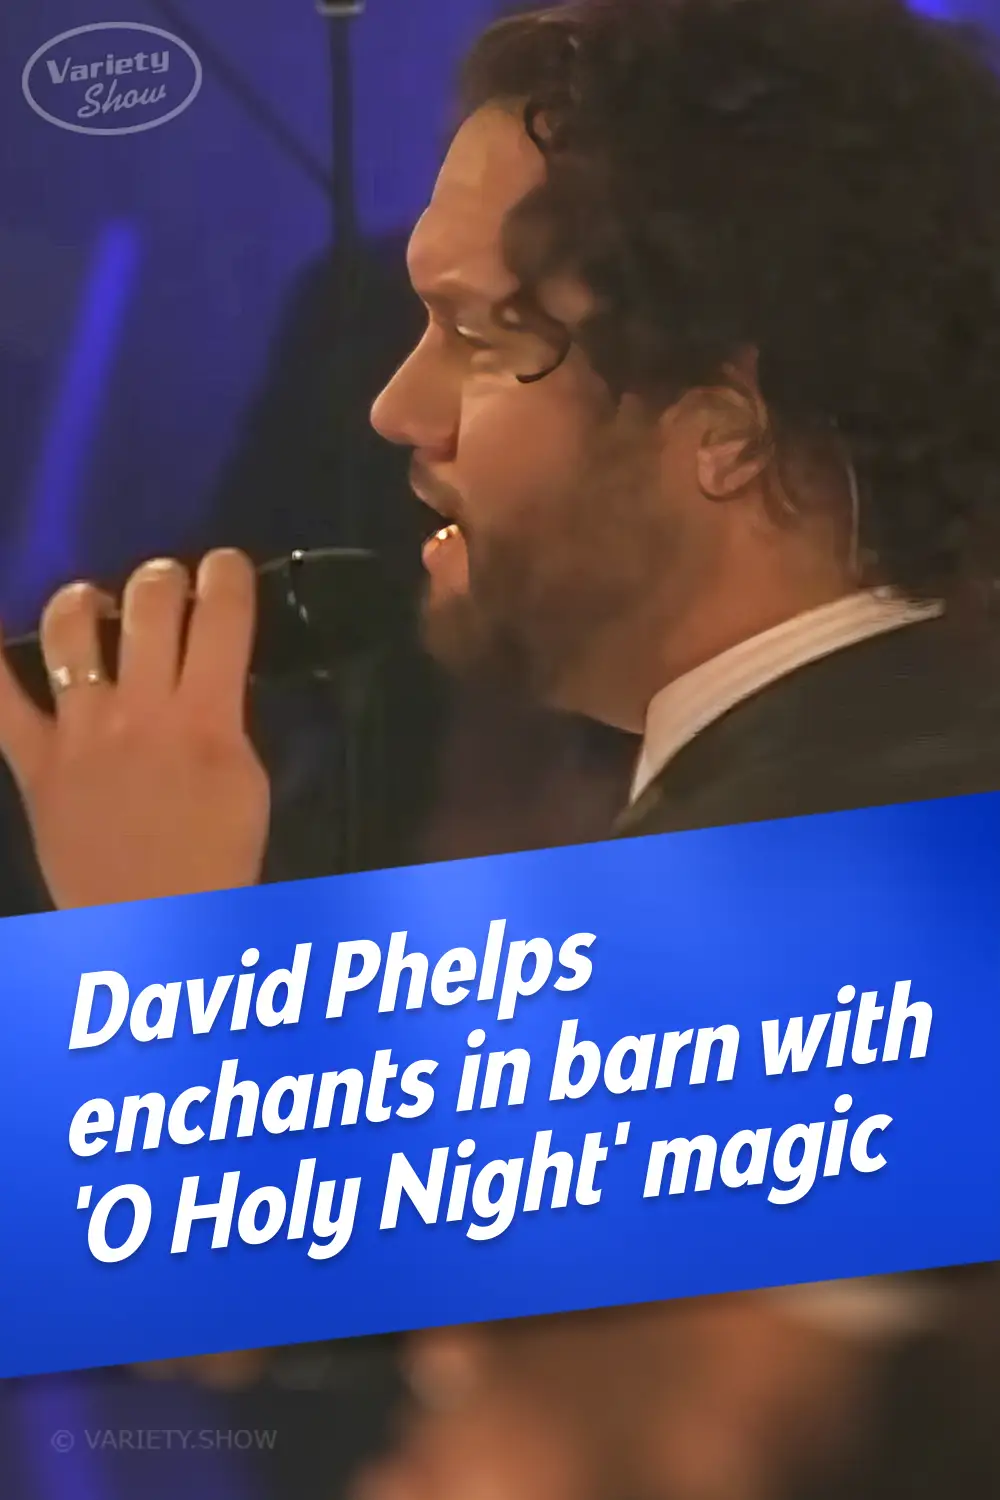 David Phelps enchants in barn with \'O Holy Night\' magic